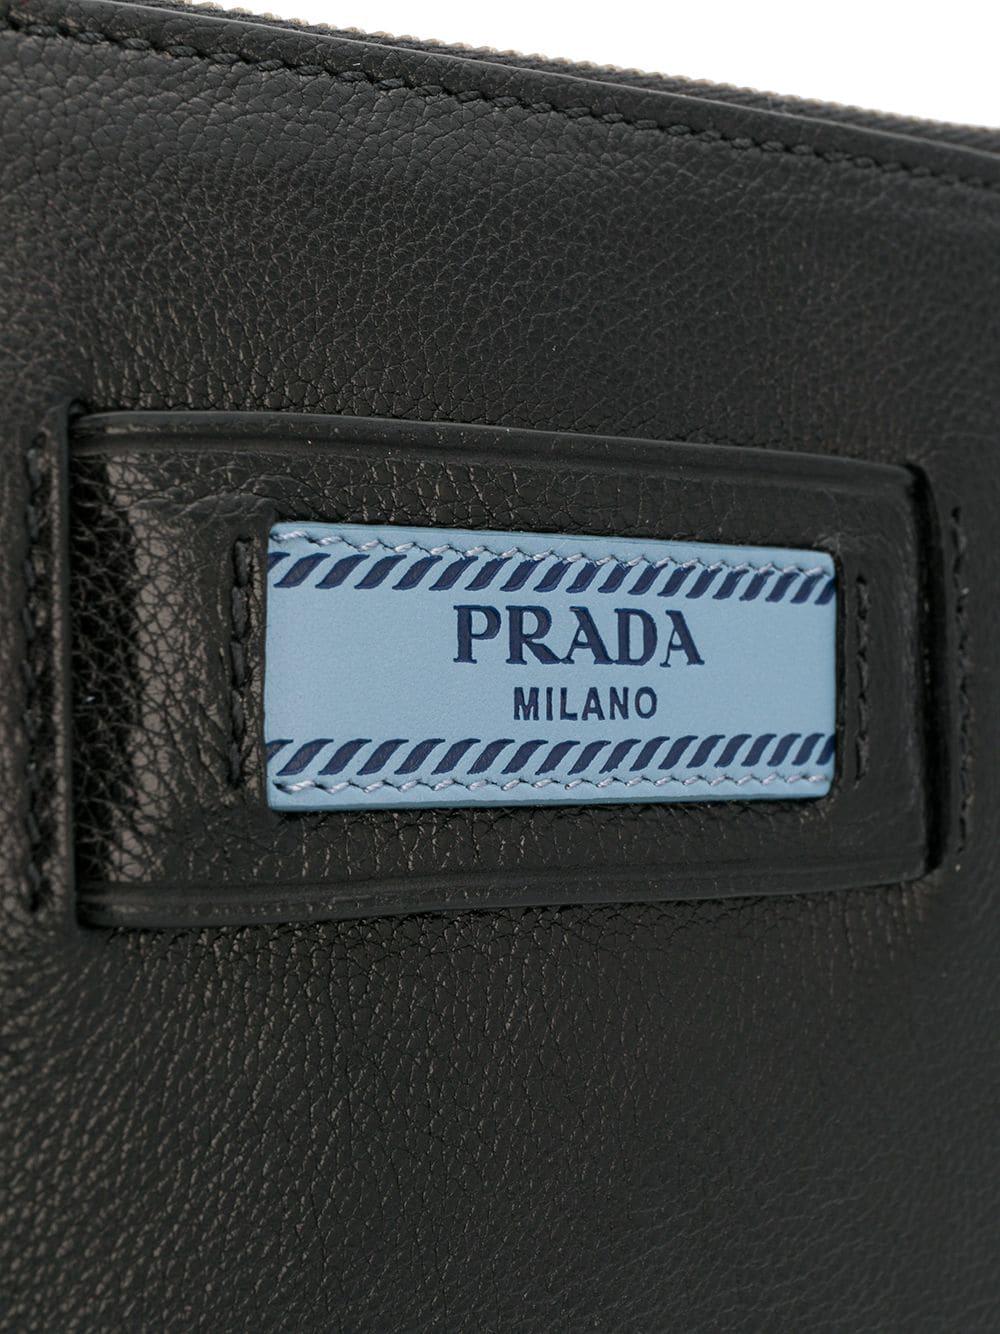 prada blue label